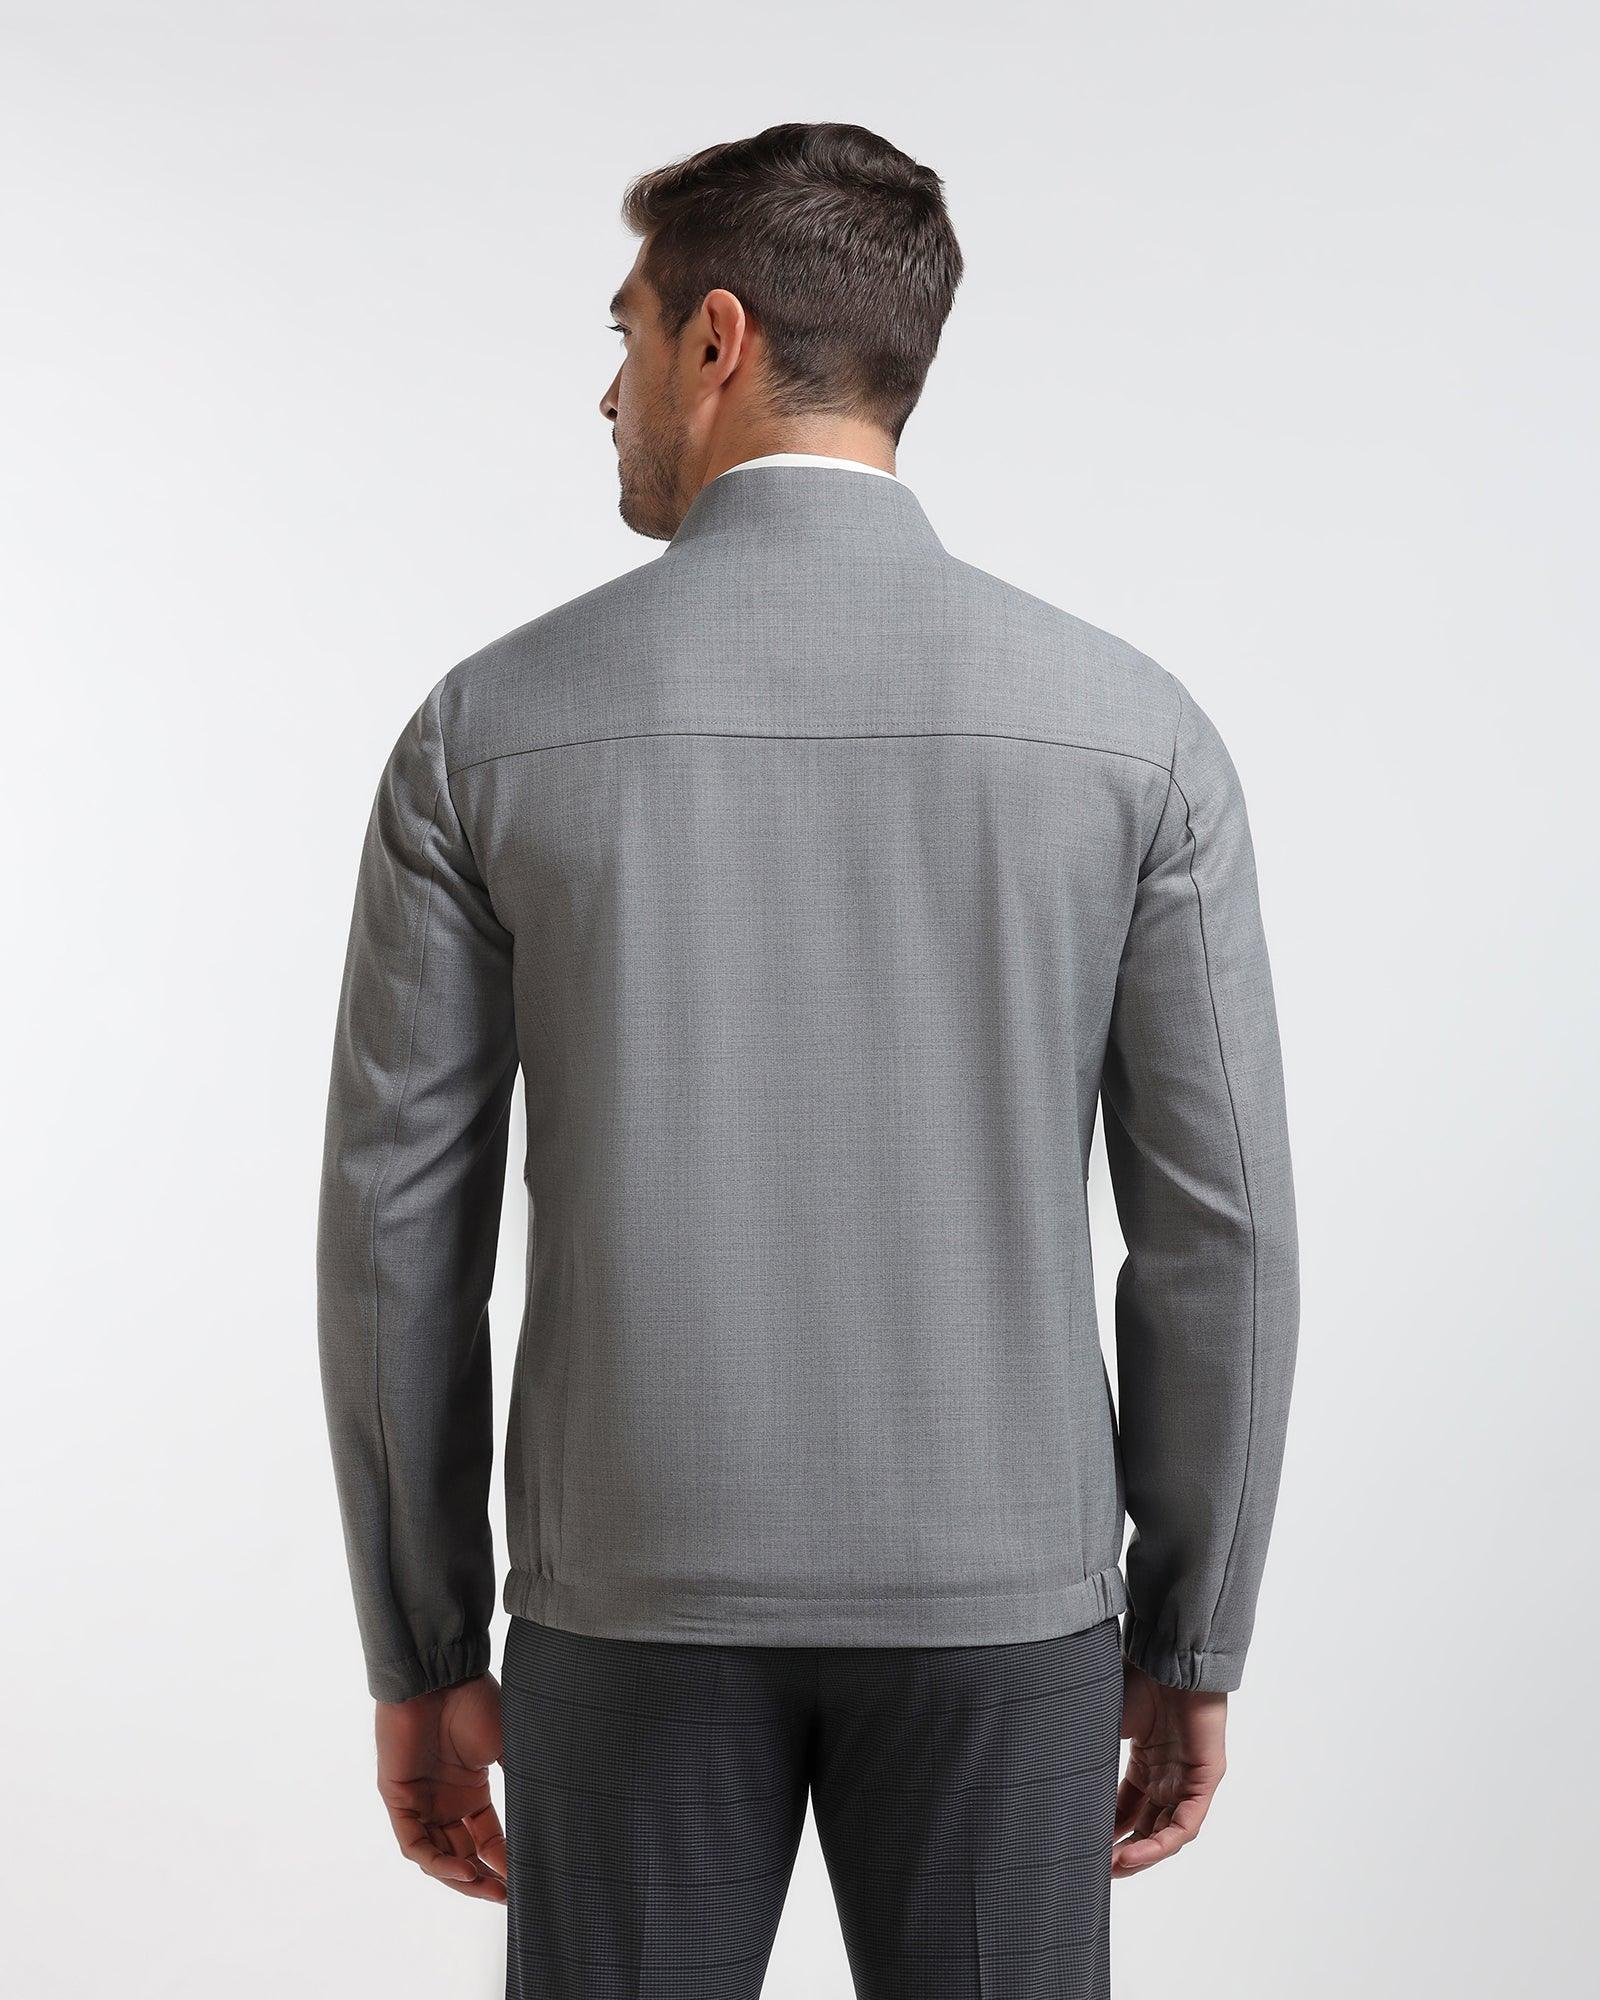 TechPro Grey Solid Zipper Jacket - Zeno